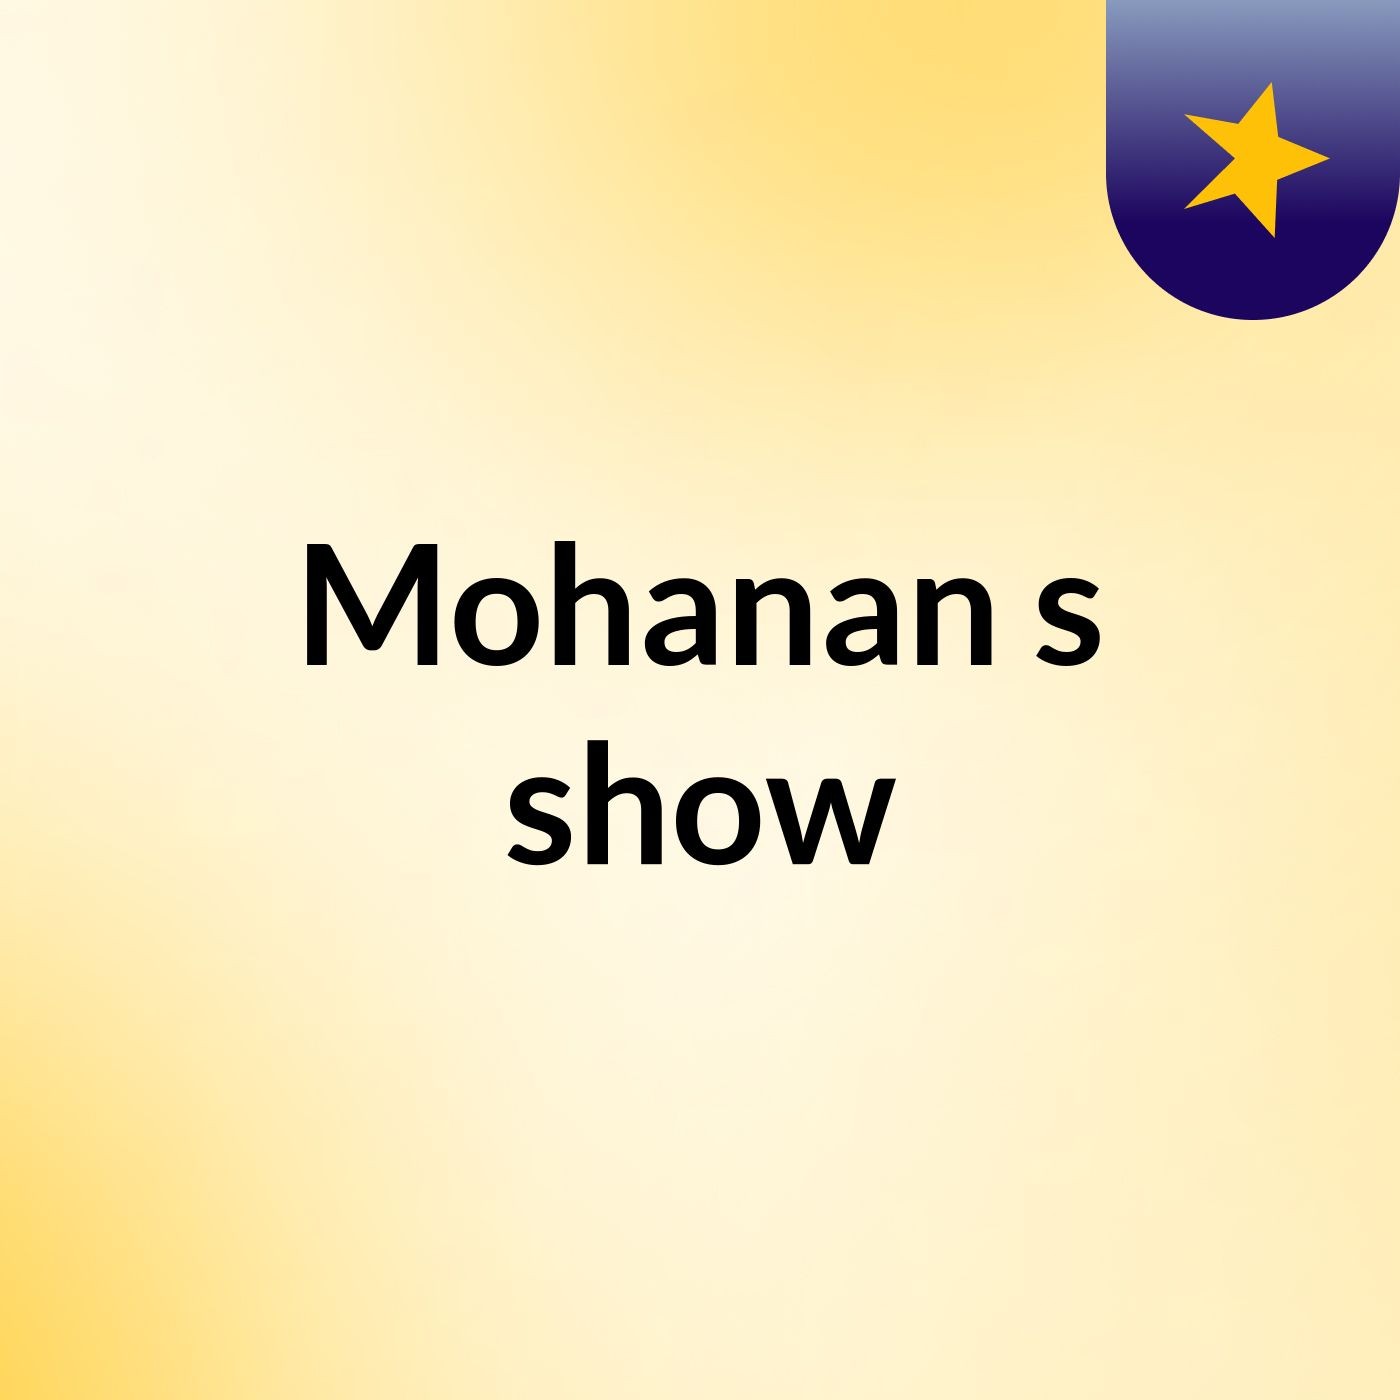 Mohanan's show